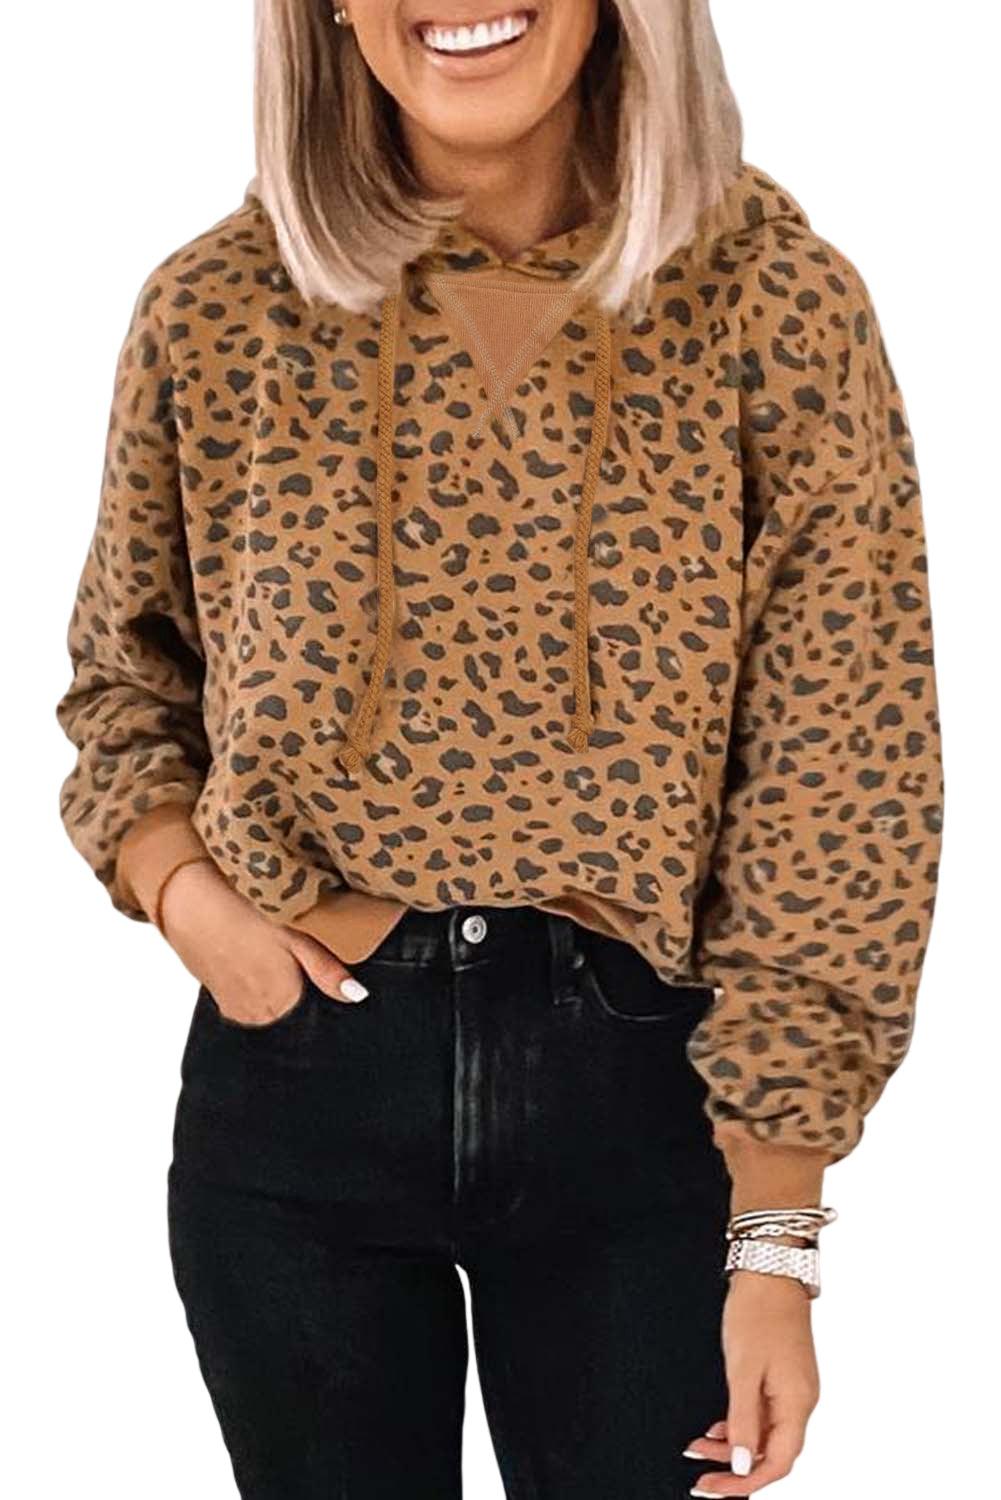 Leopard Long Sleeve Drawstring Cropped Hoodie - L & M Kee, LLC